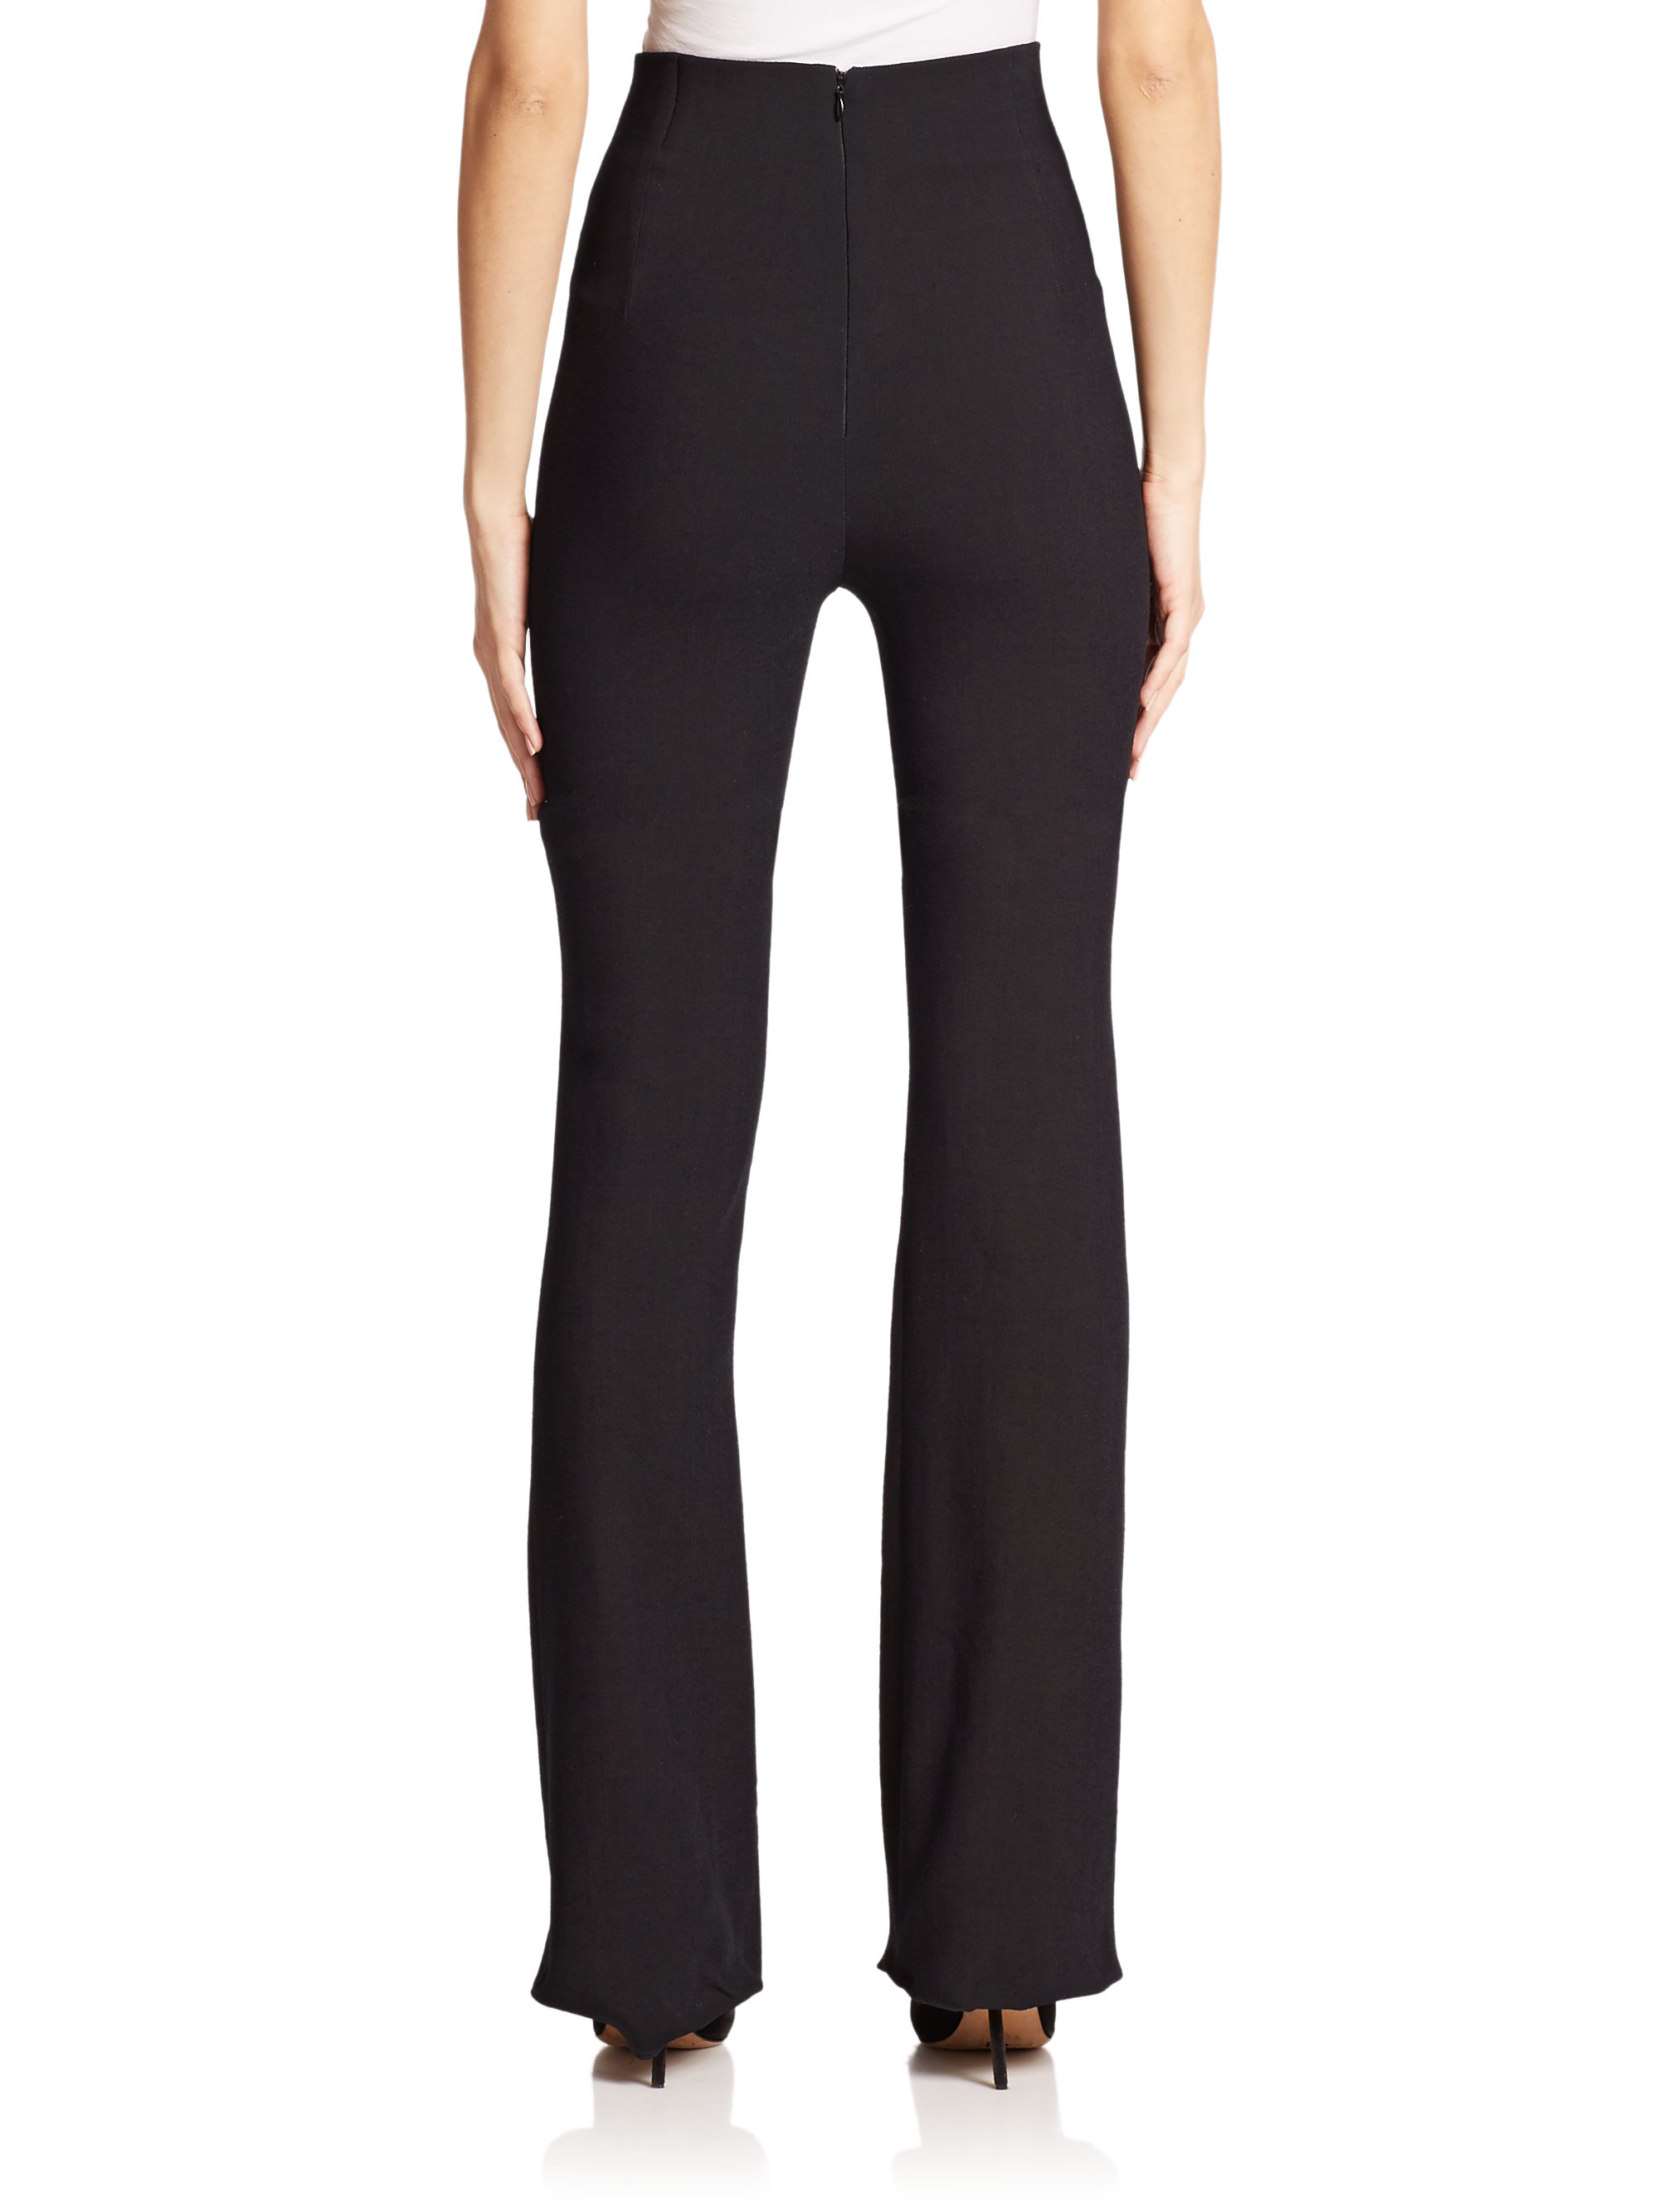 Lyst - Donna Karan High-waist Pants in Black